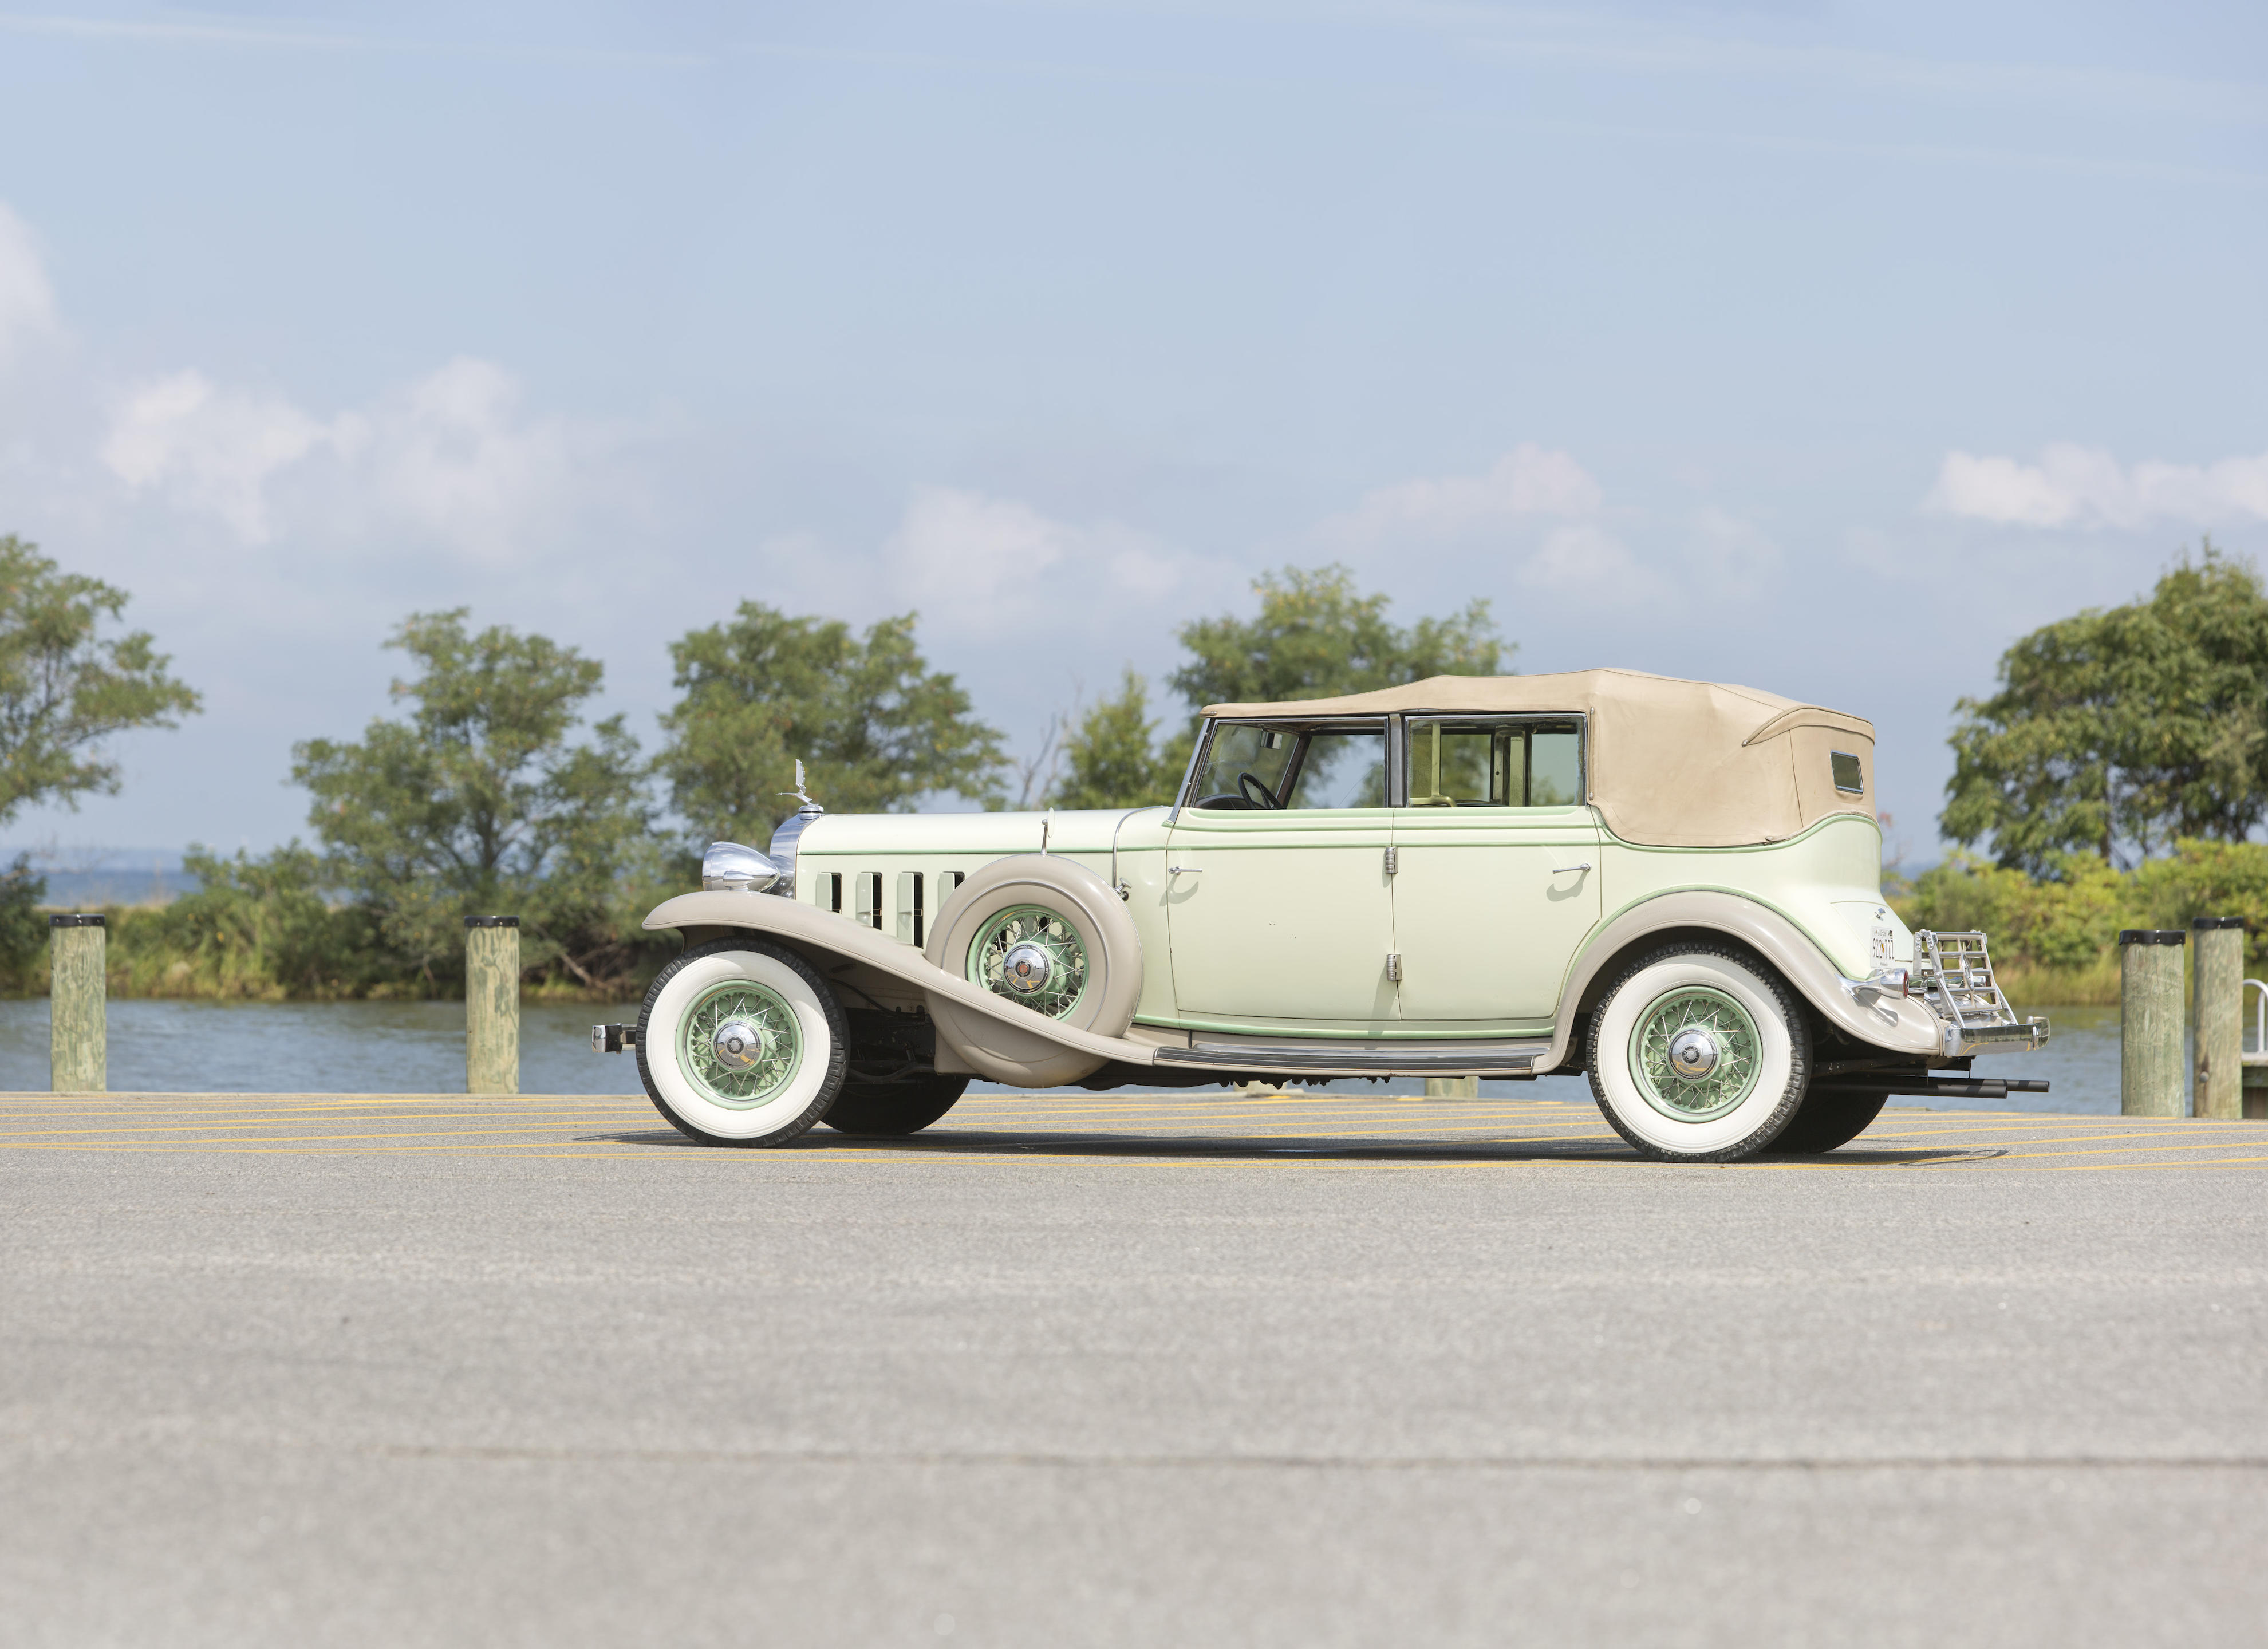 1932 Cadillac V8 Phaeton Factory Photo Ref. # 29882 